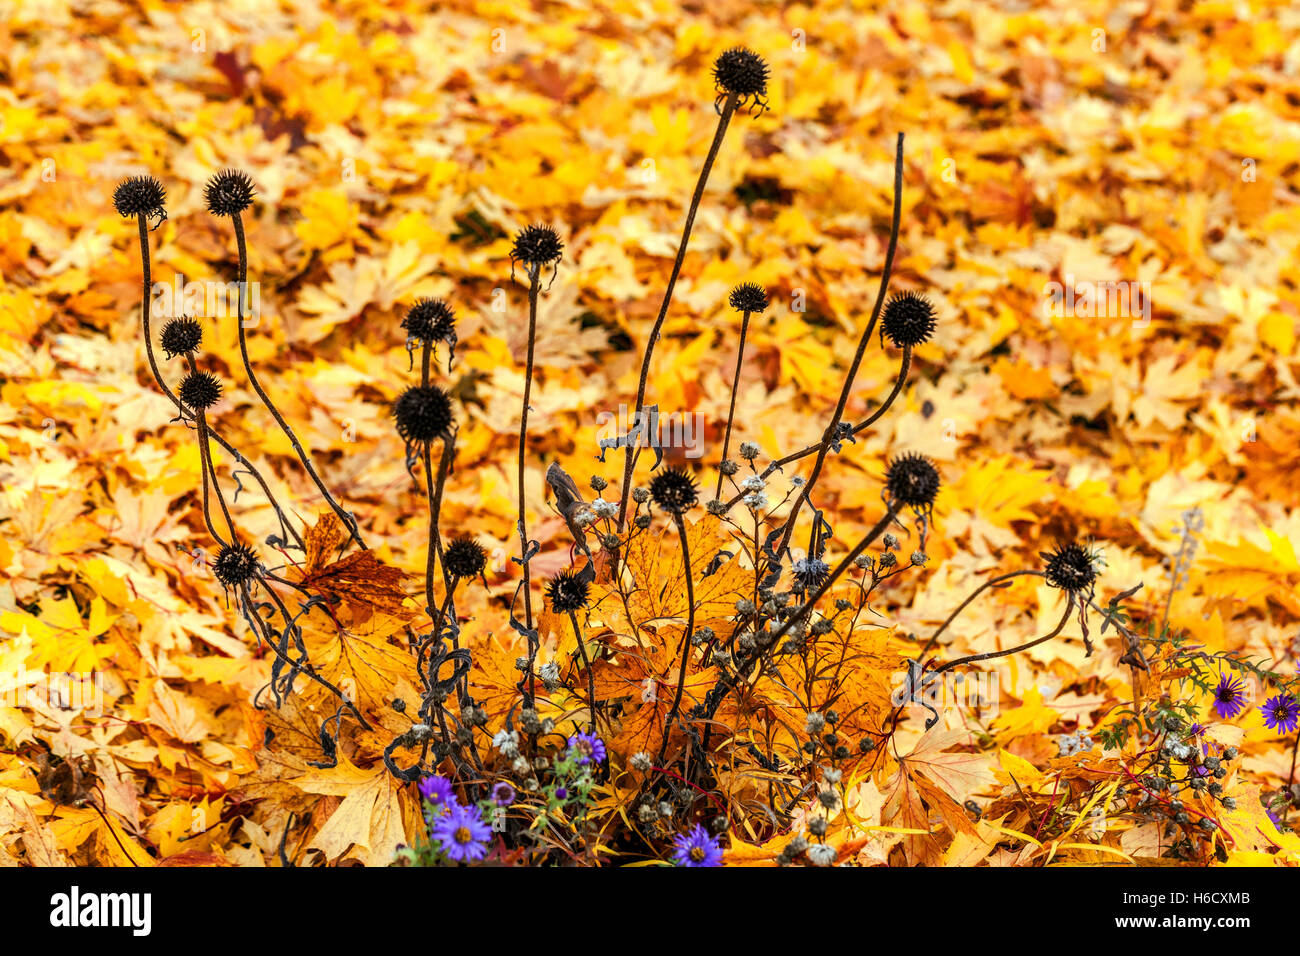 Echinacea purpurea dry stalks on a yellow background Leaves on the ground deadhead Stock Photo